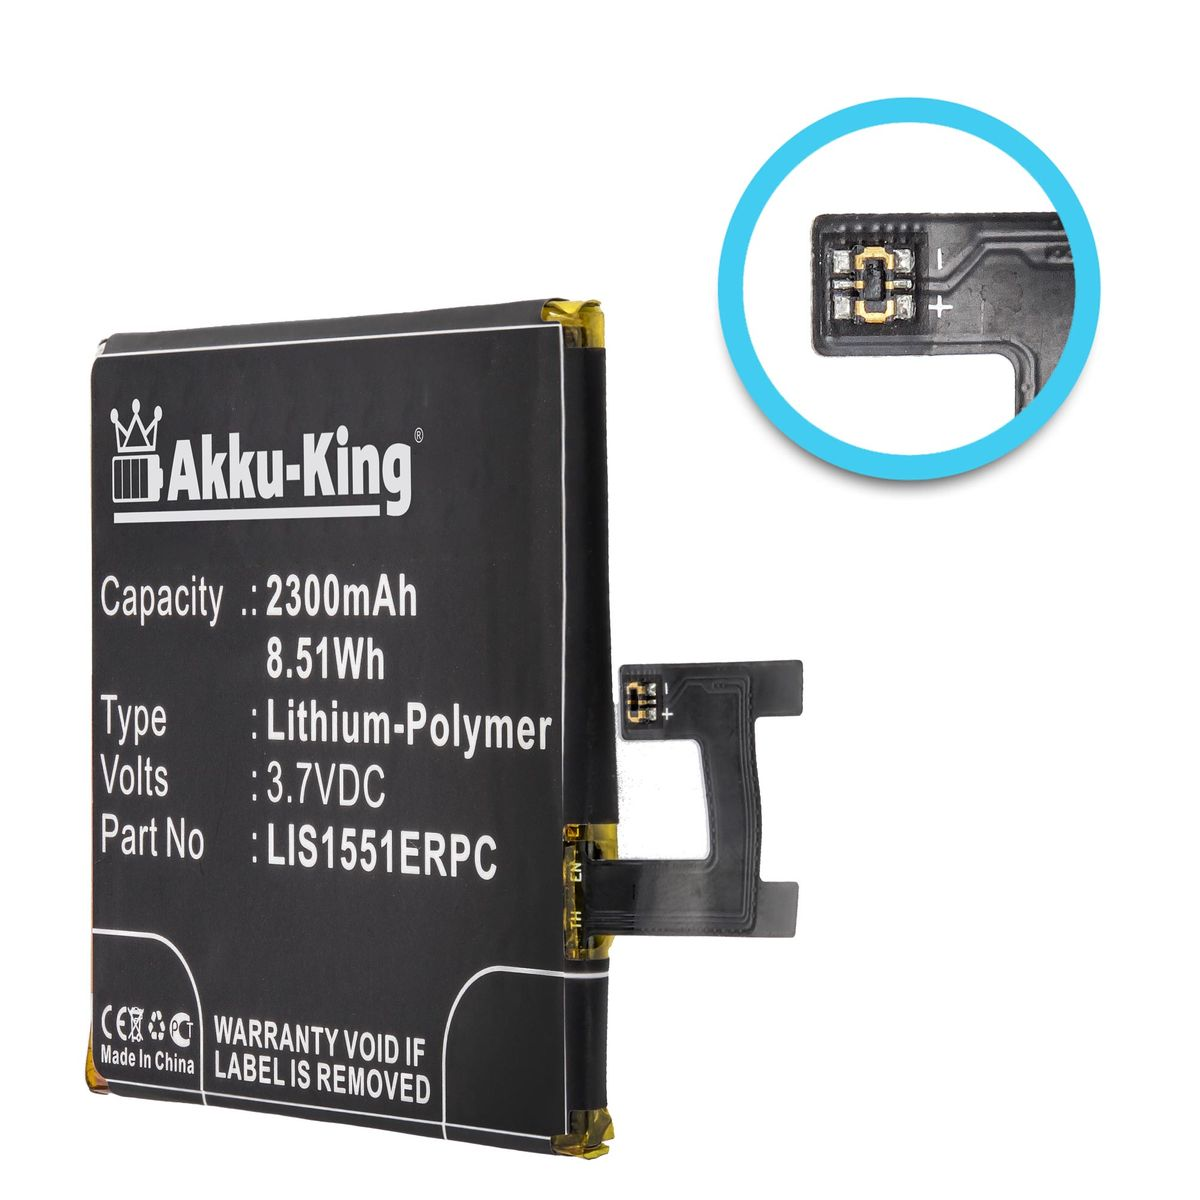 AKKU-KING Akku kompatibel mit 3.7 LIS1551ERPC Sony Handy-Akku, Volt, 2300mAh Li-Polymer